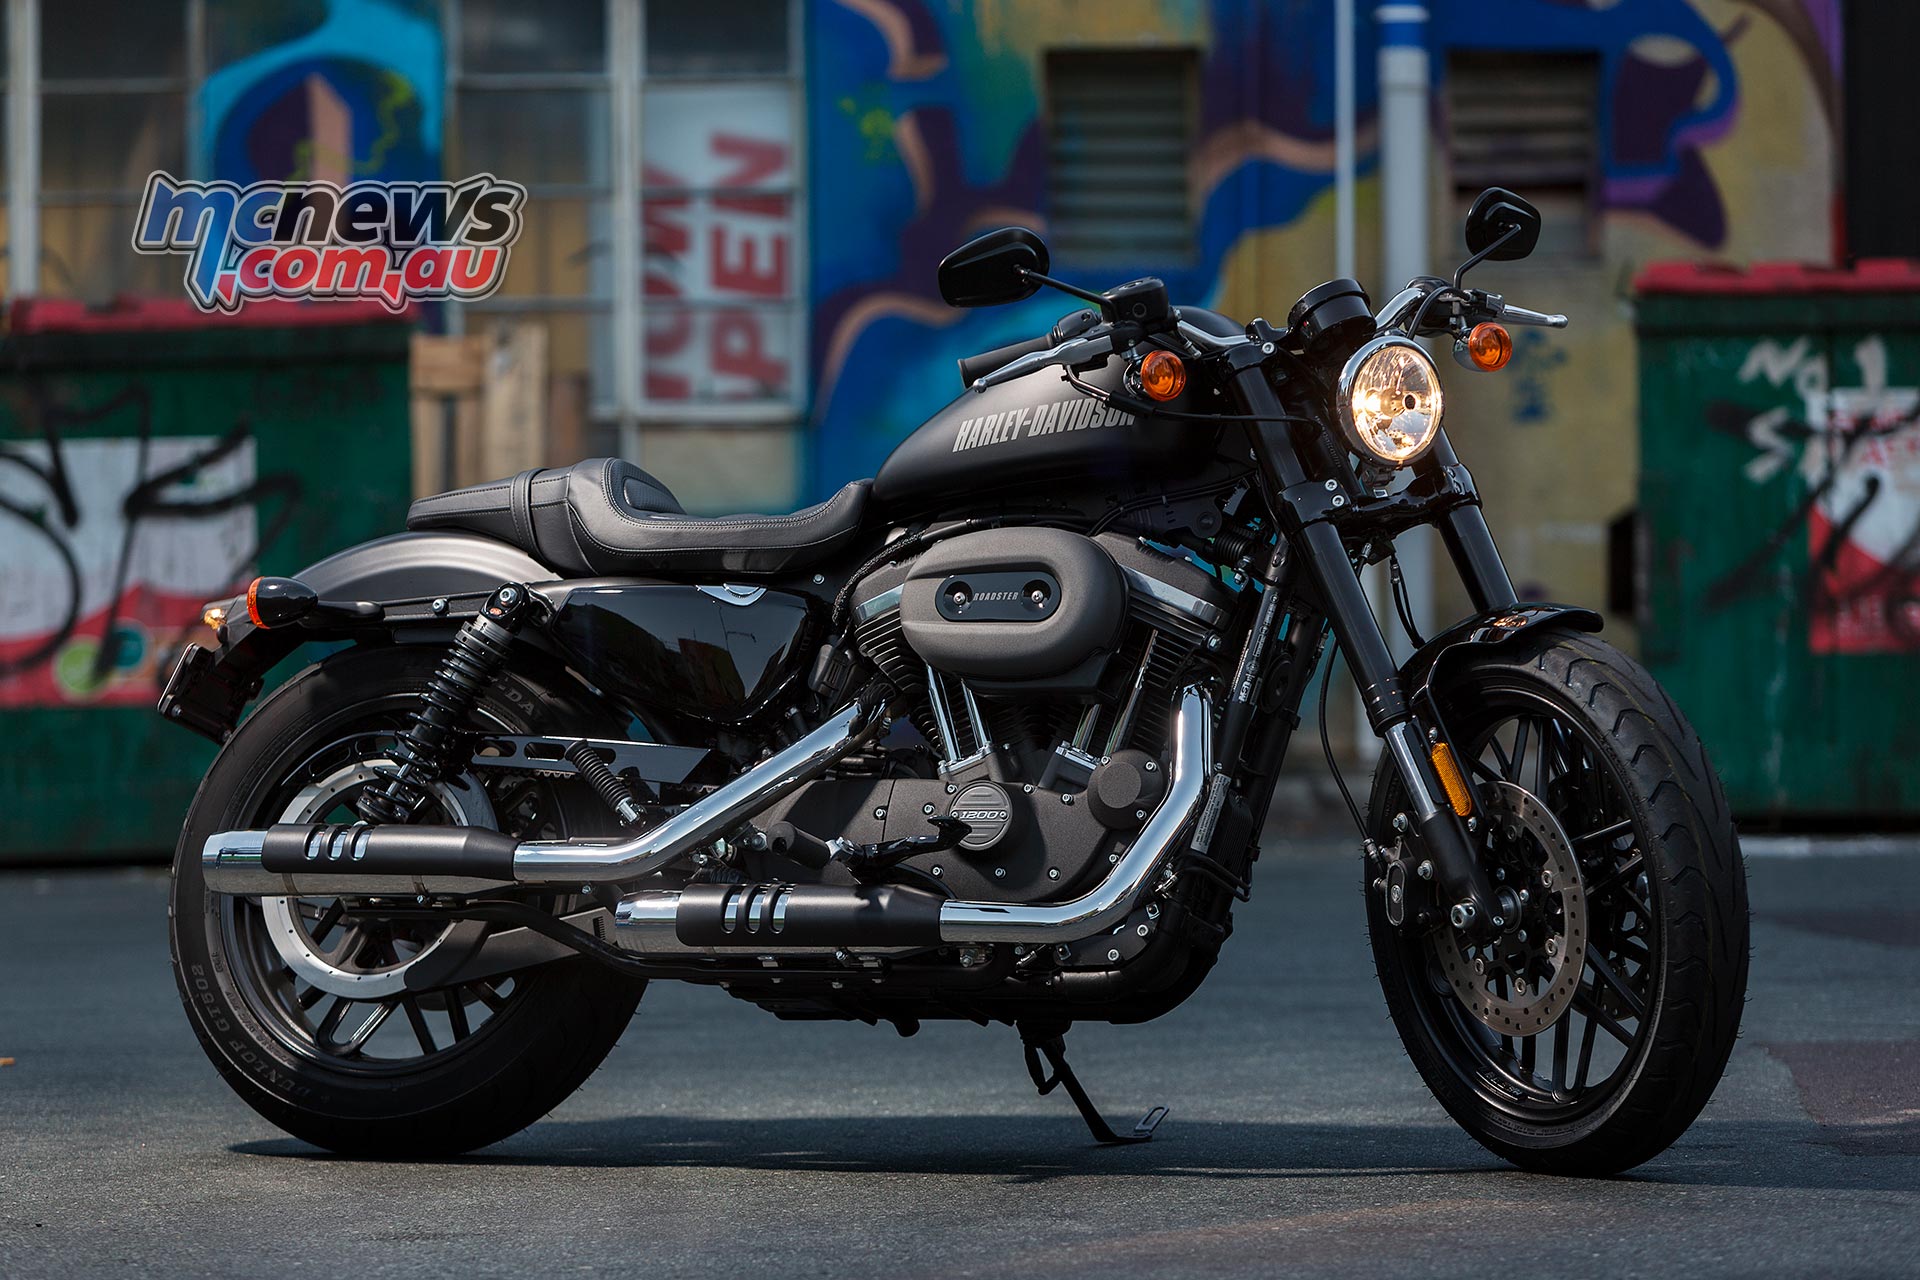 Harley Davidson Roadster Review Mcnews